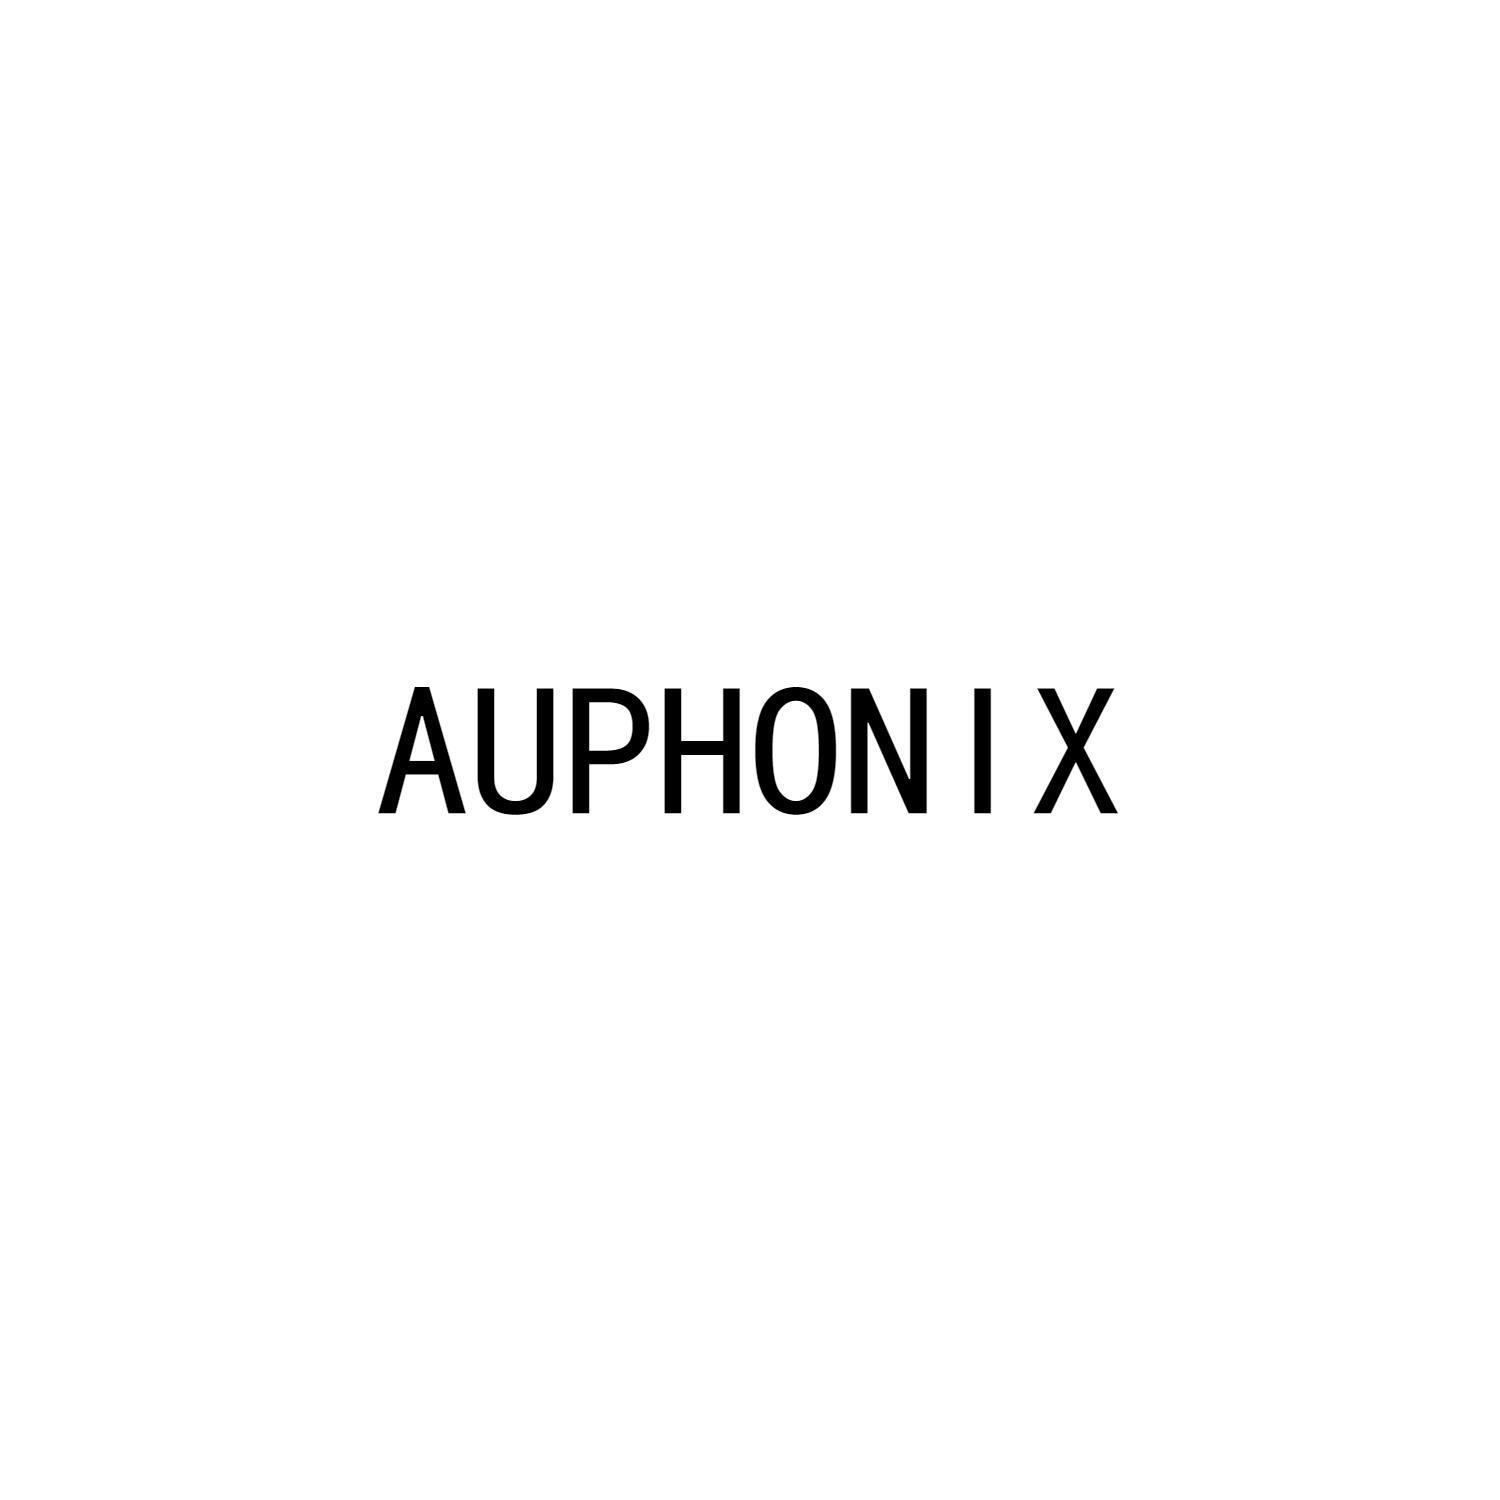 AUPHONIX